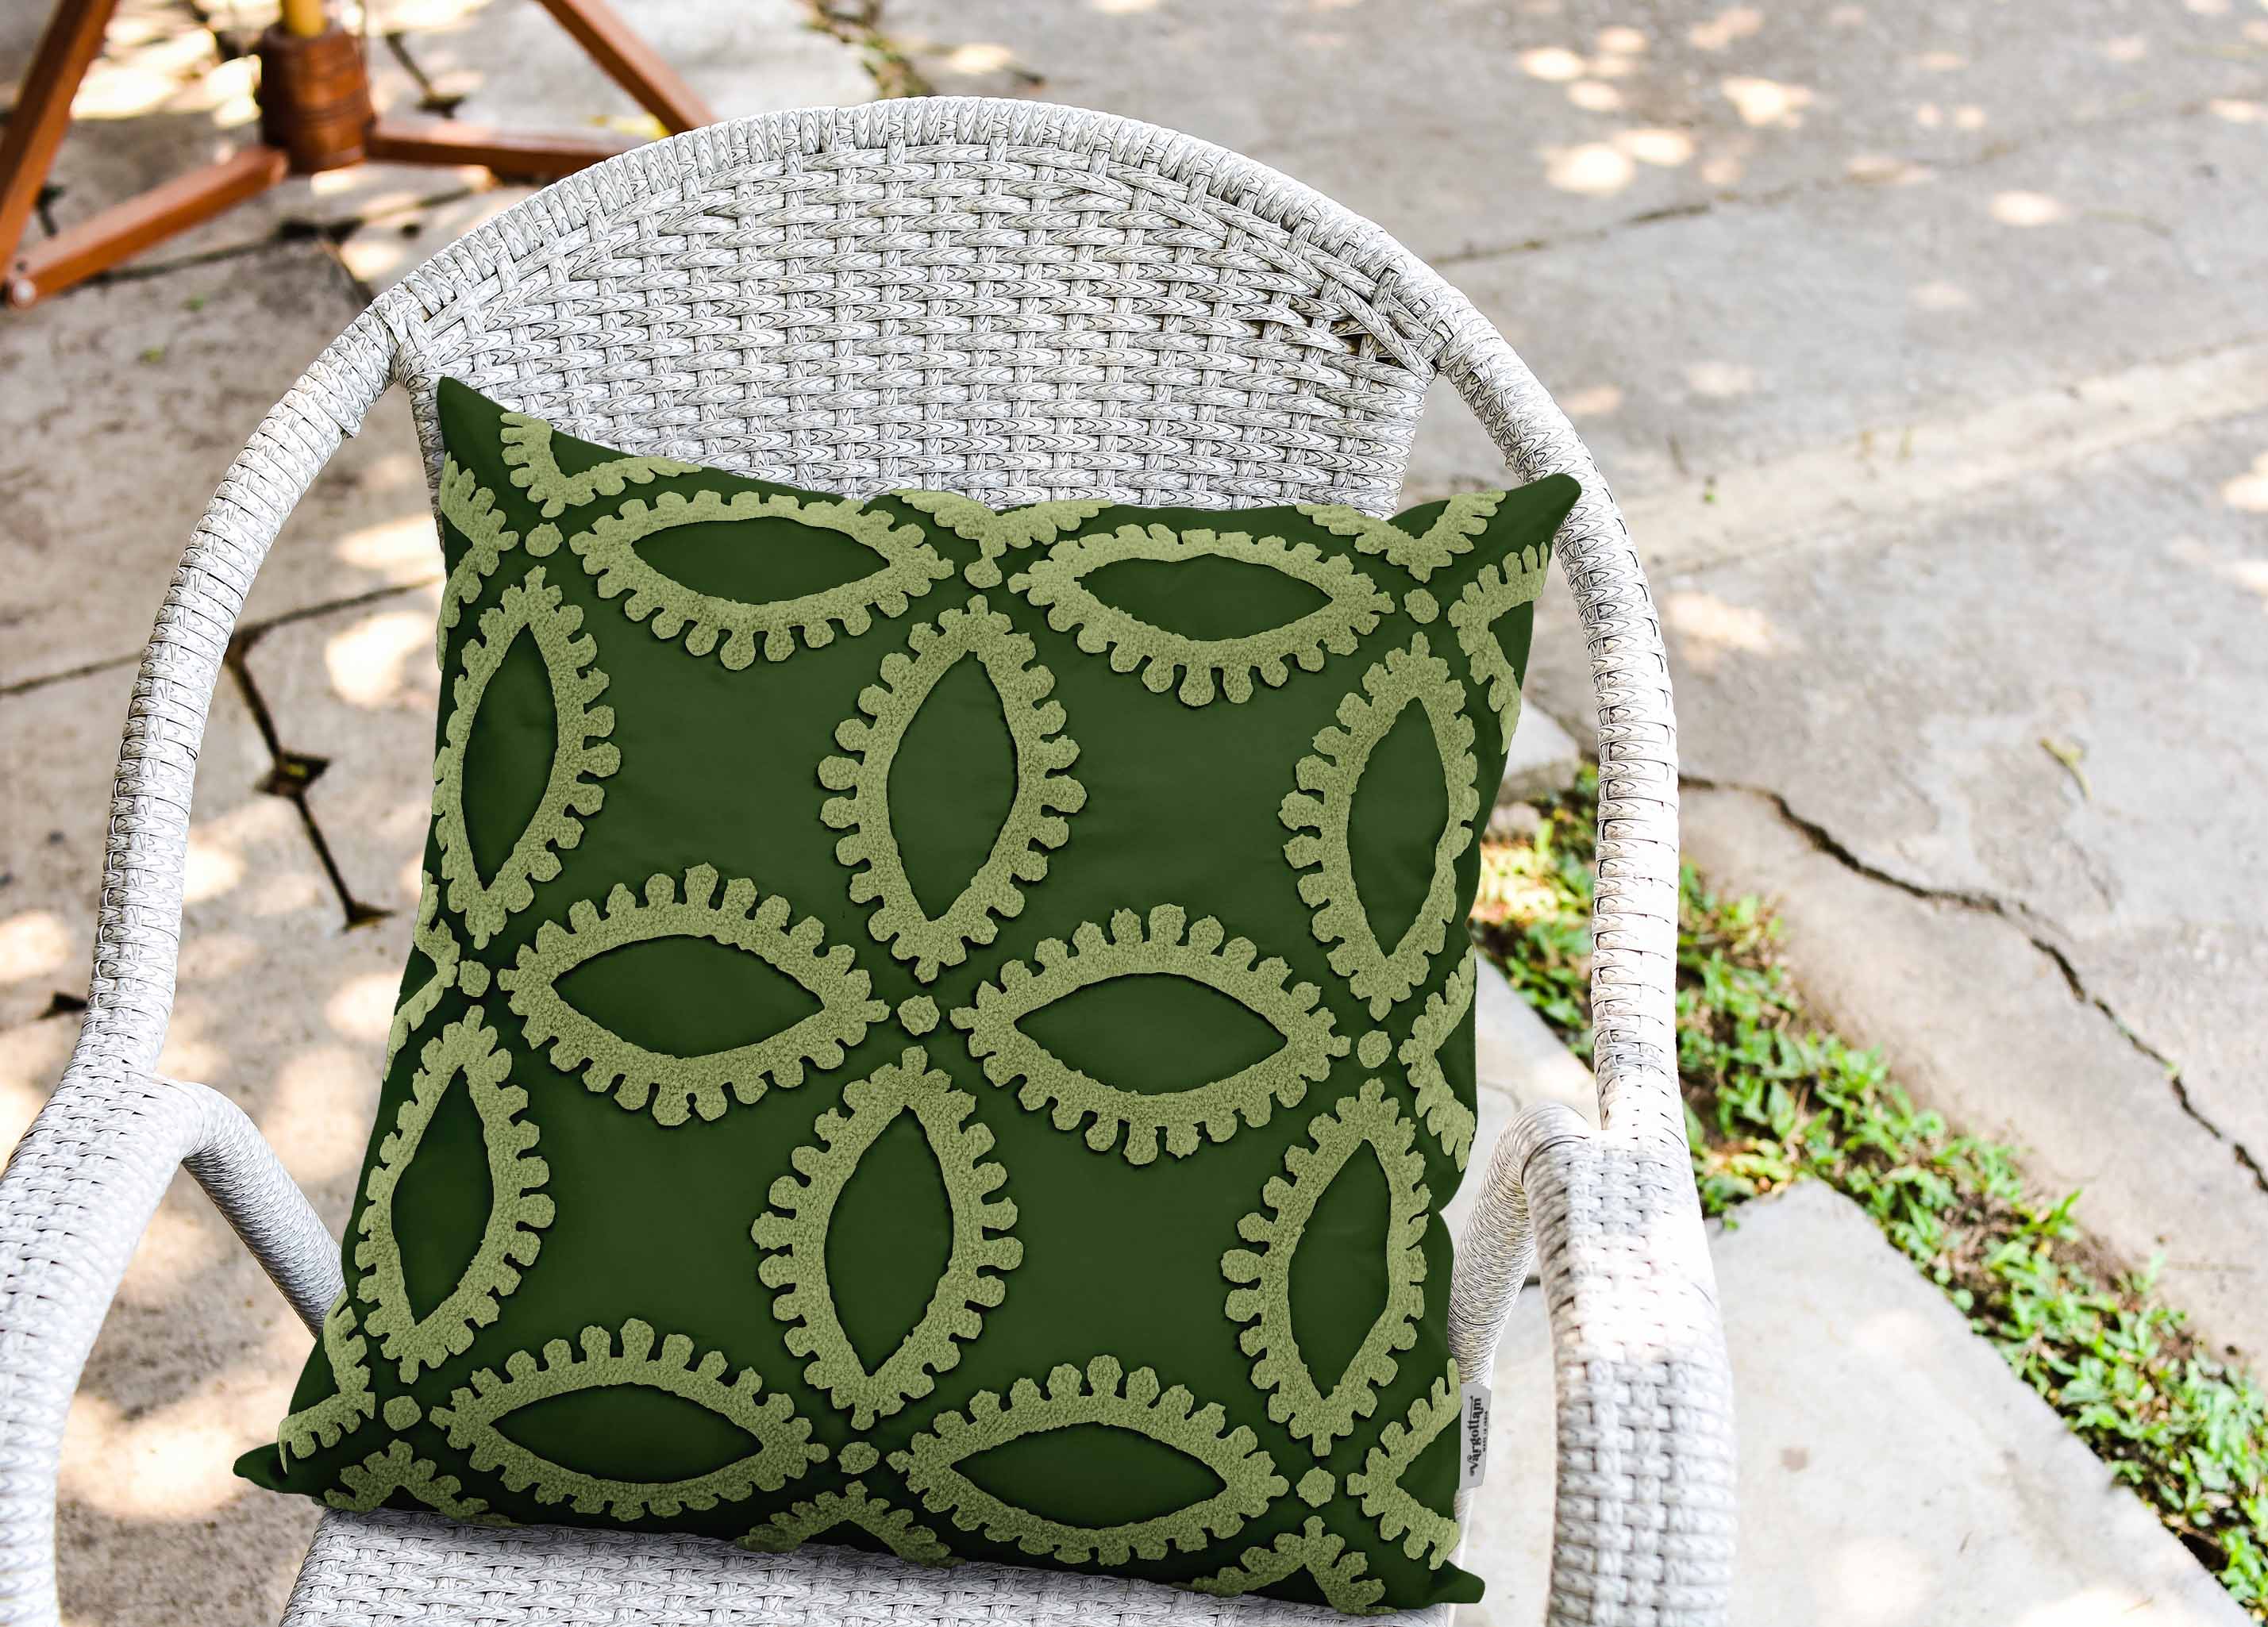 Vargottam Outdoor Decorative Throw Pillow CoversTowelEmbroideredPolyester Handmade Boho Cushion CoversFor Outdoor Patio -Asian - Dark Green - image 2 of 6